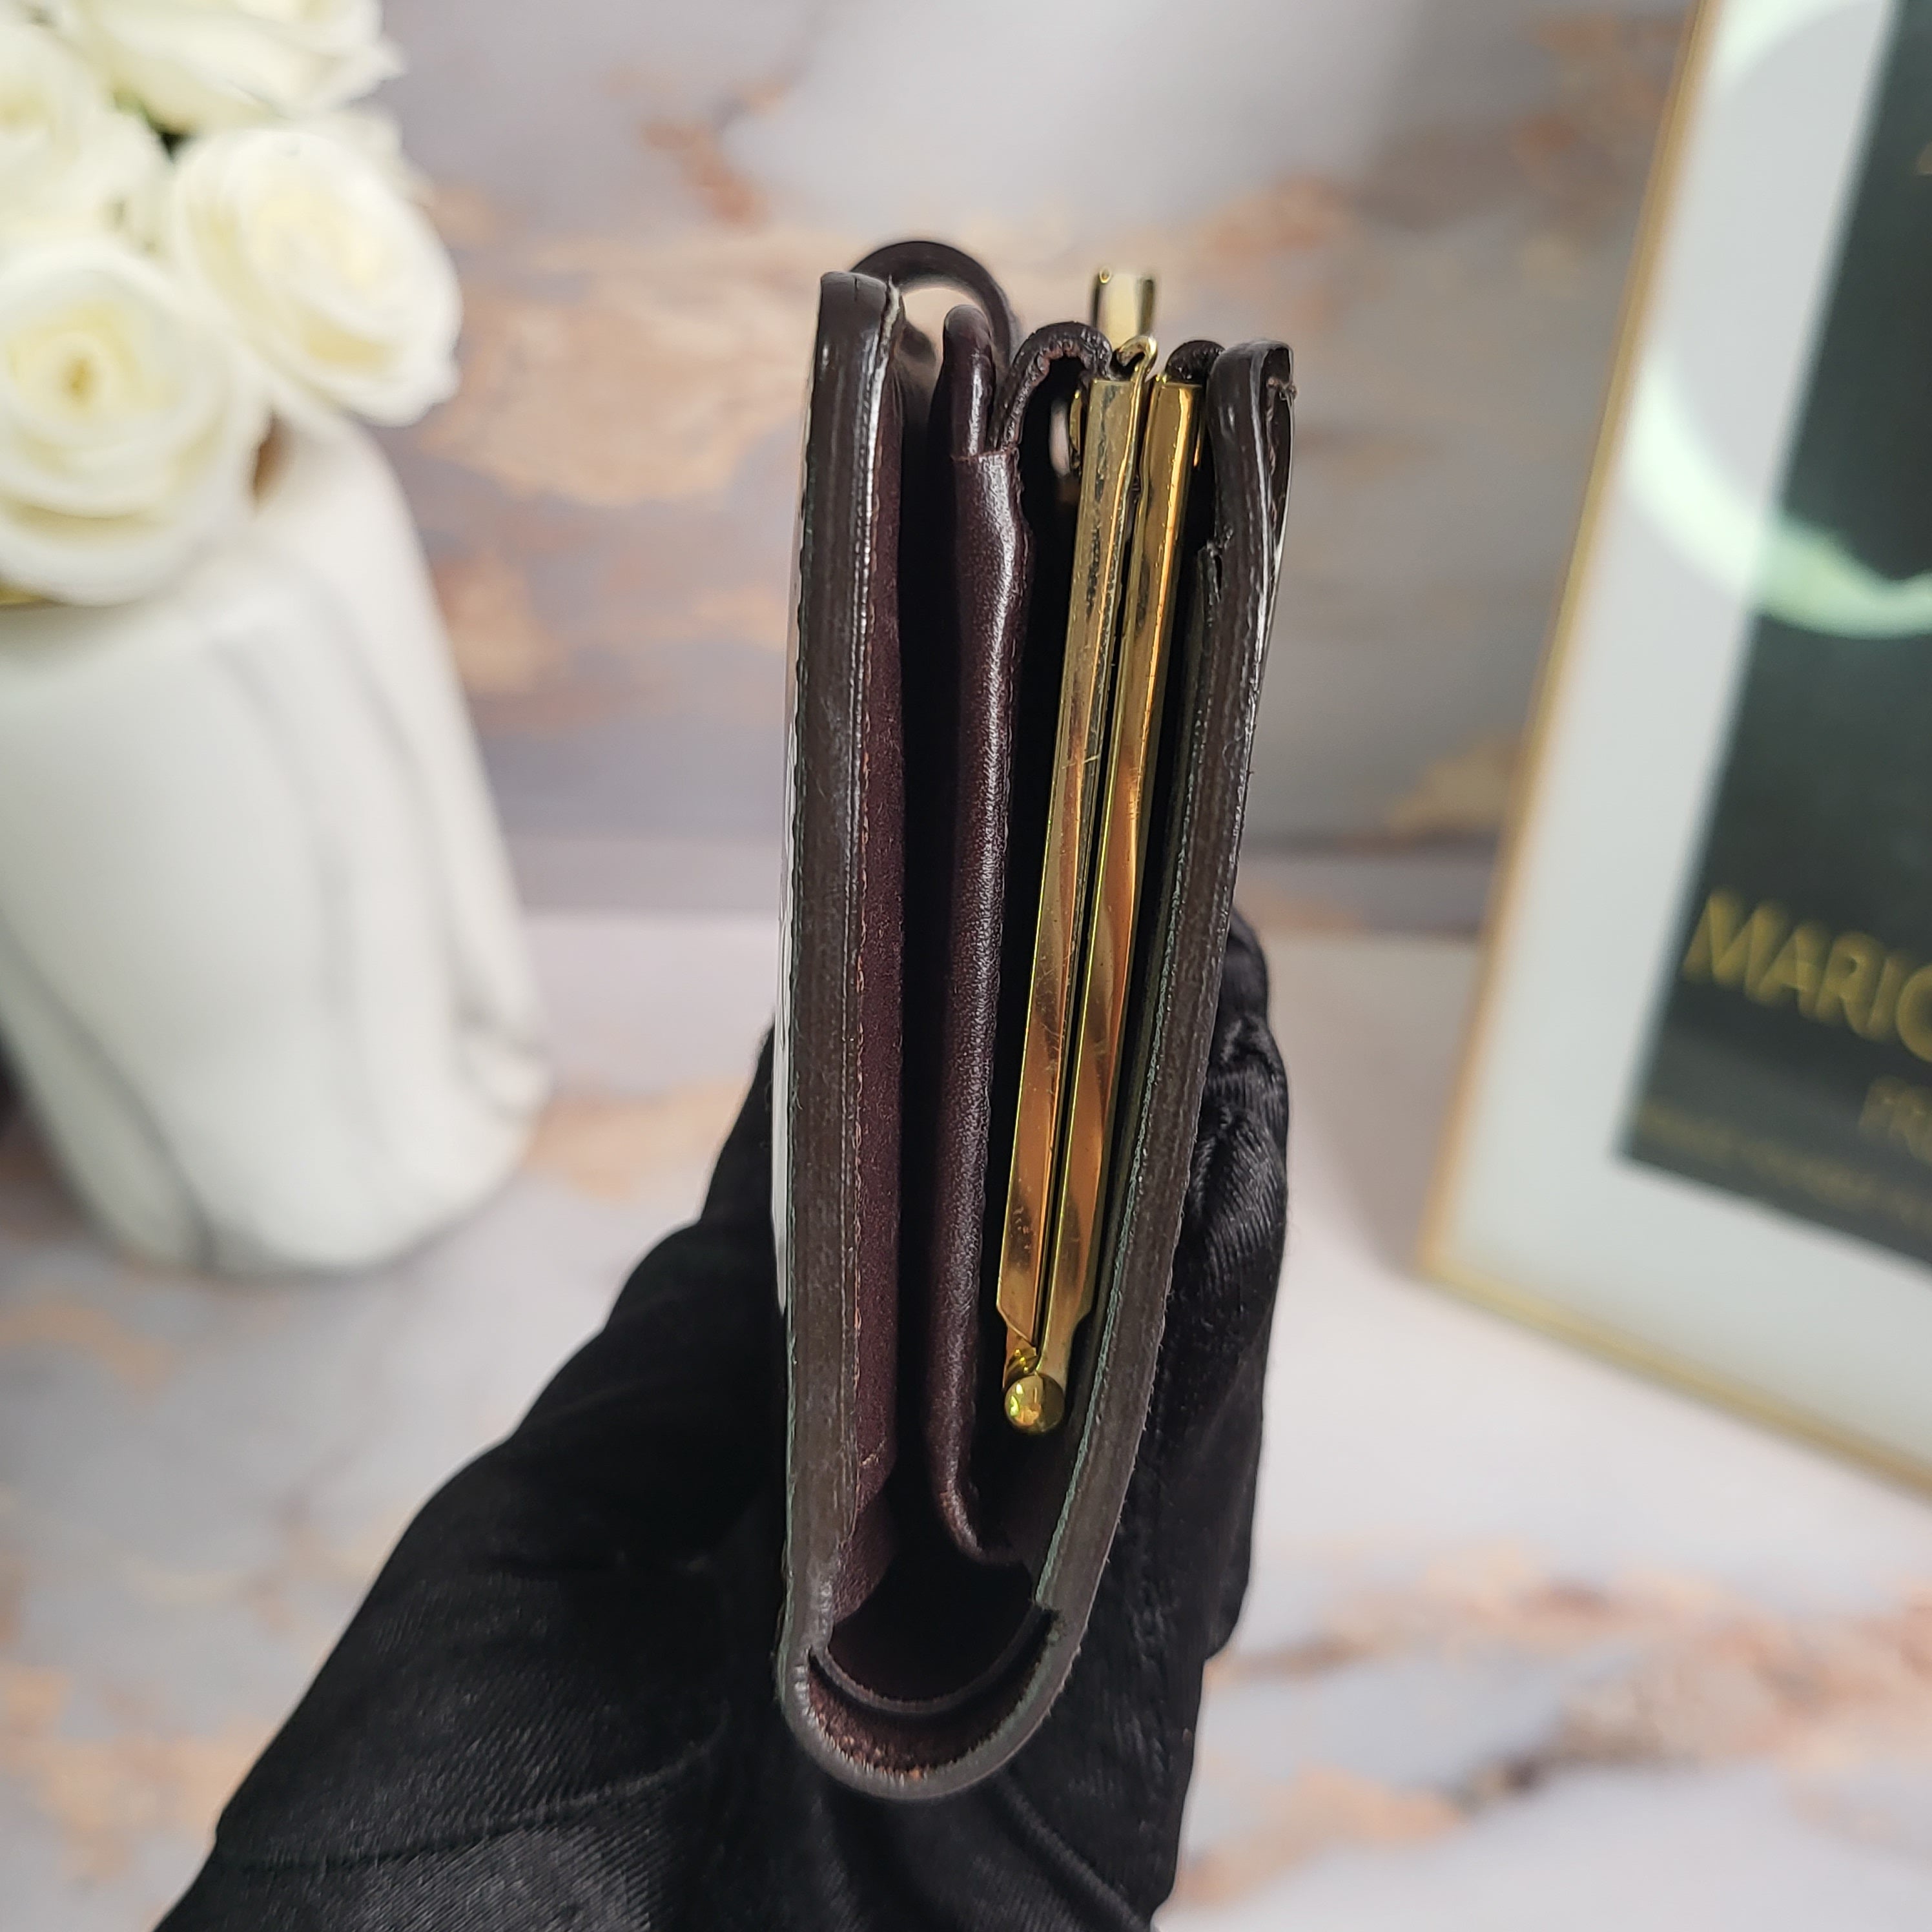 Louis Vuitton French Purse Kisslock Wallet